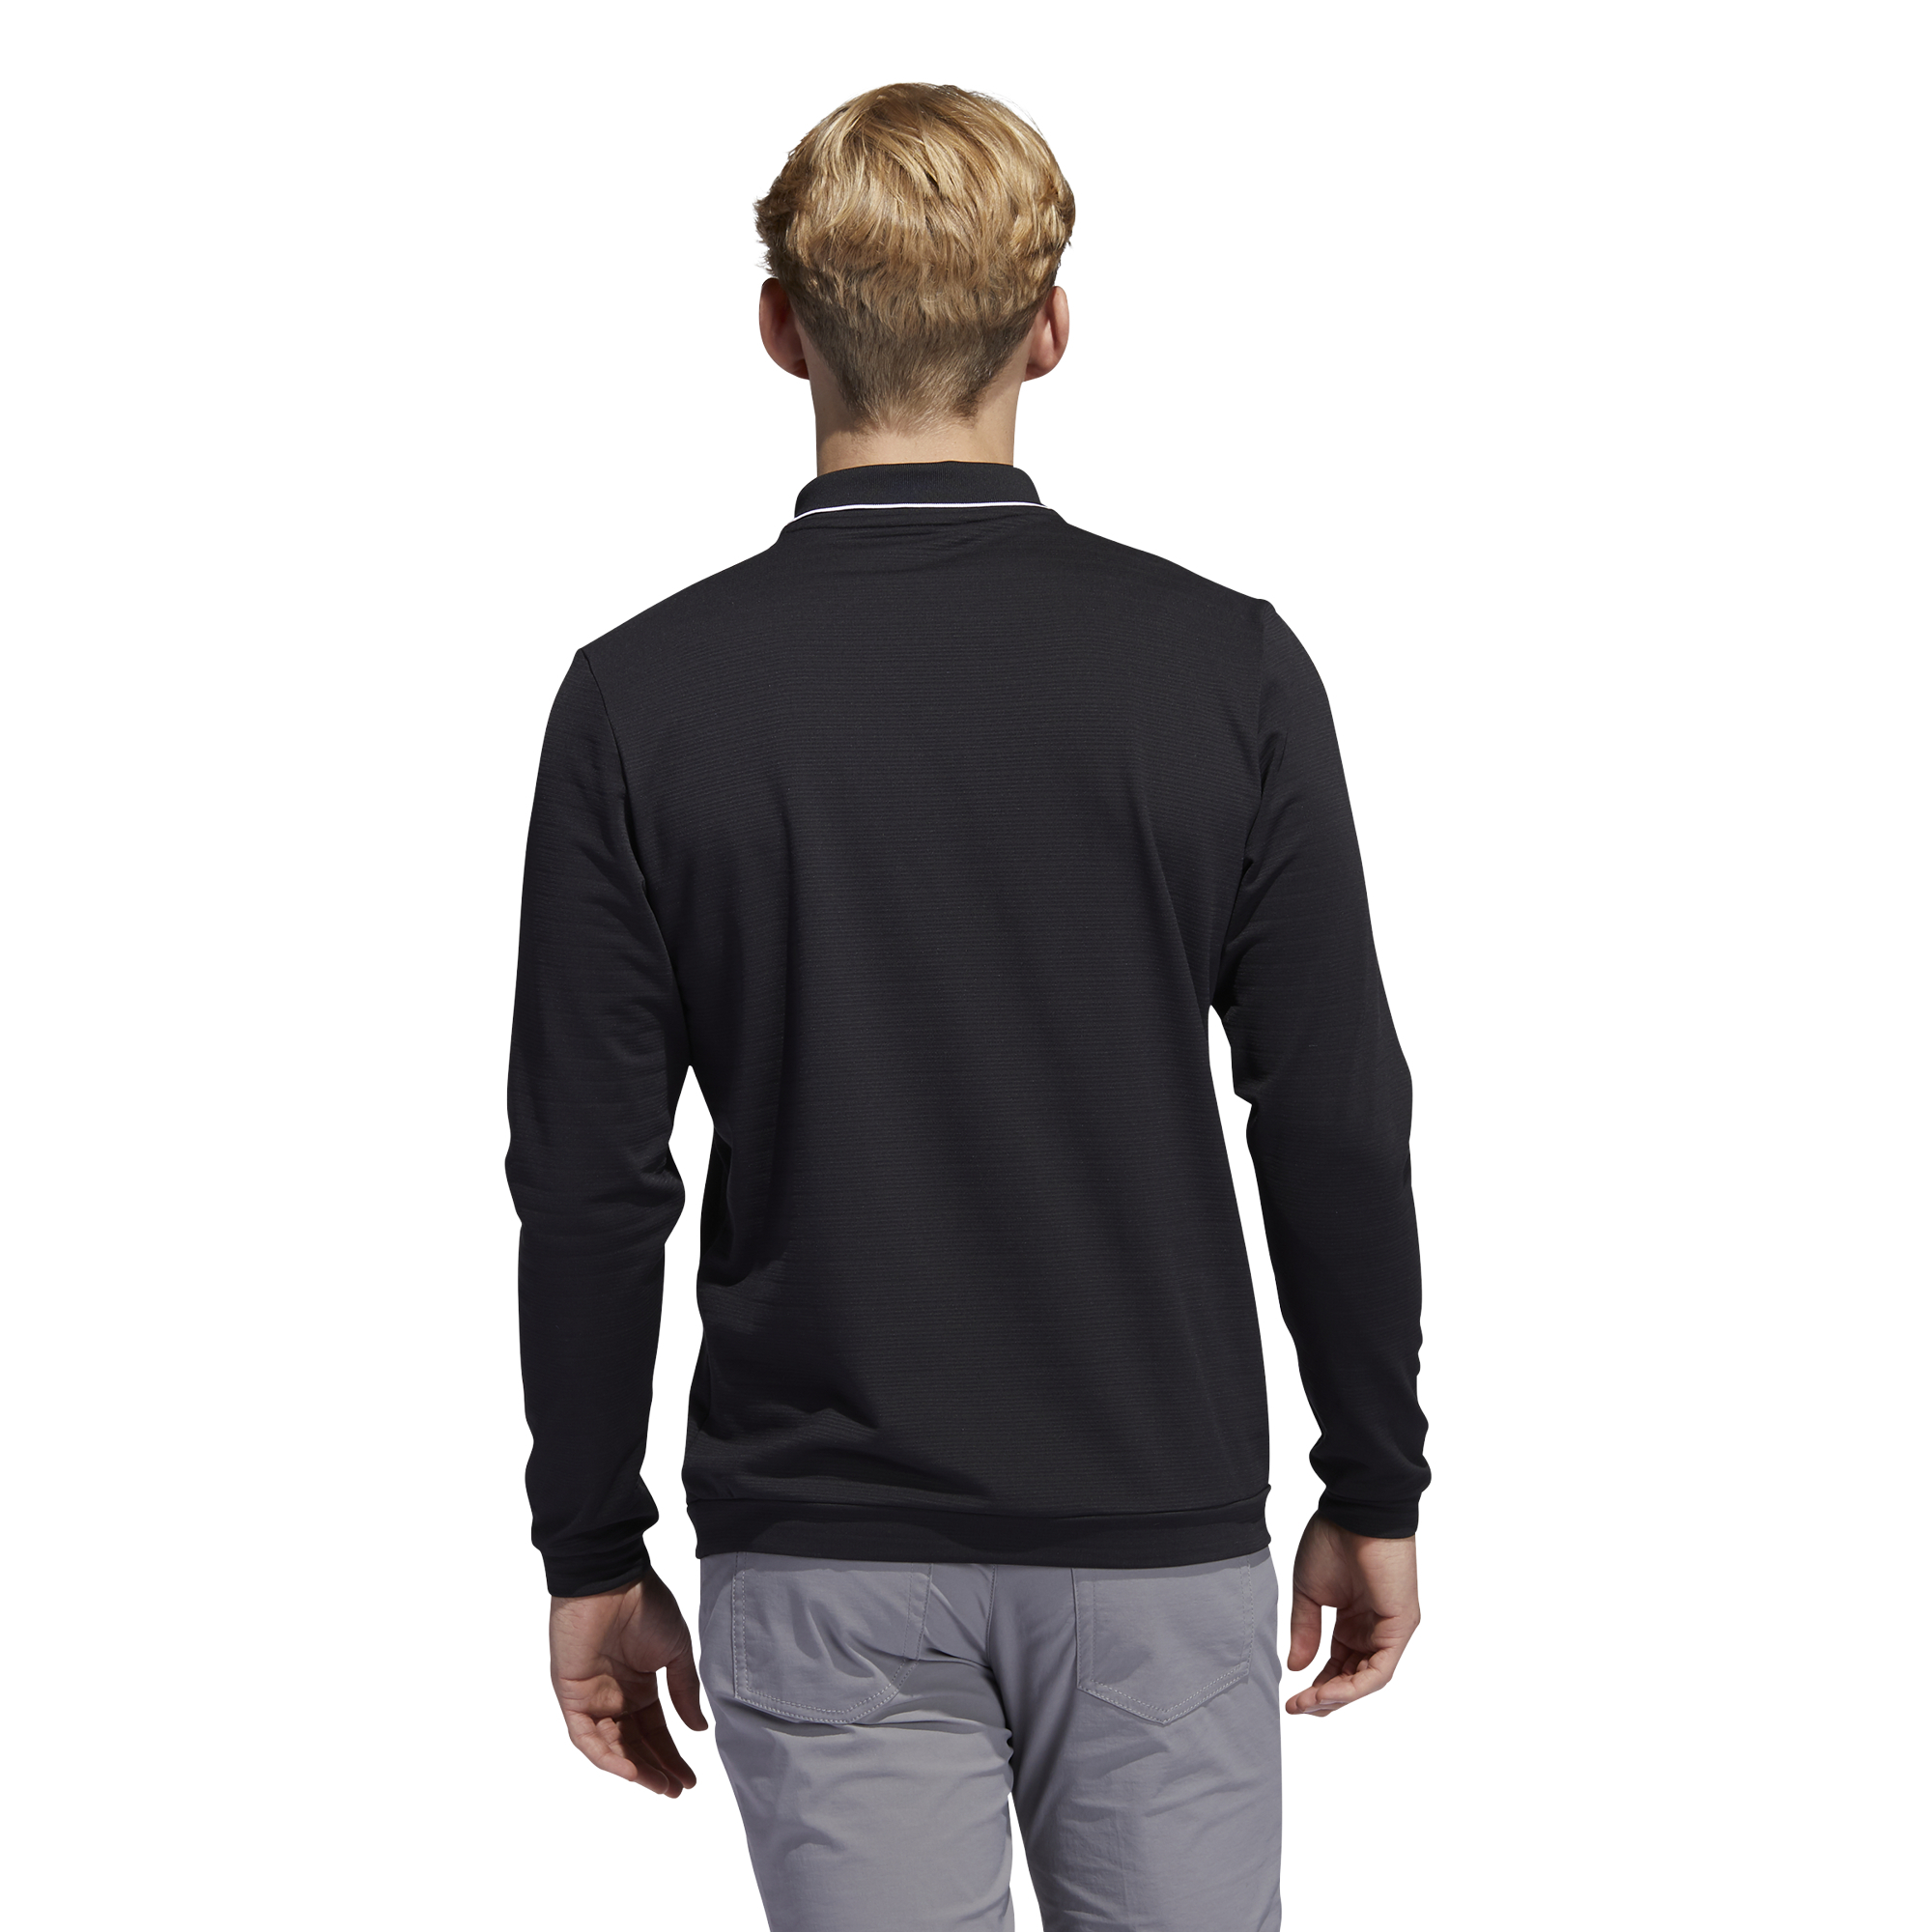 adidas Golf Thermal Primegreen Long Sleeve Polo Shirt 